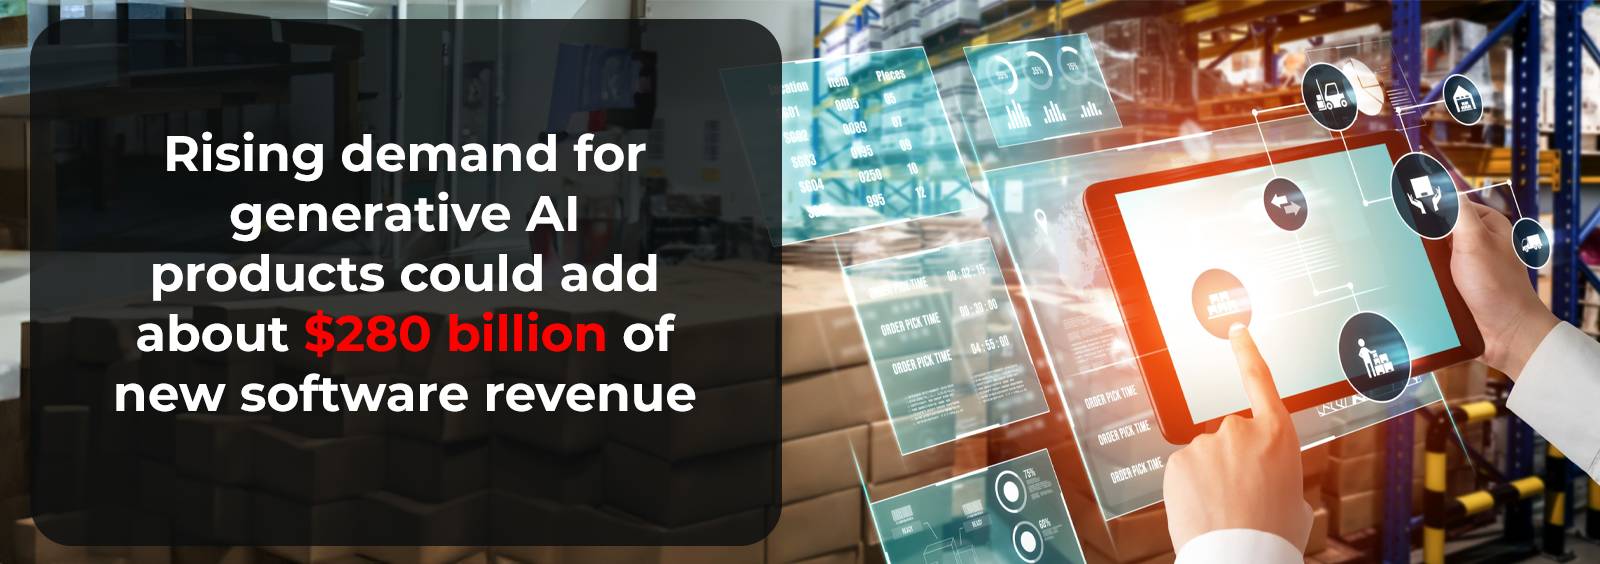 New revenue opportunity using Generative AI of $280 million